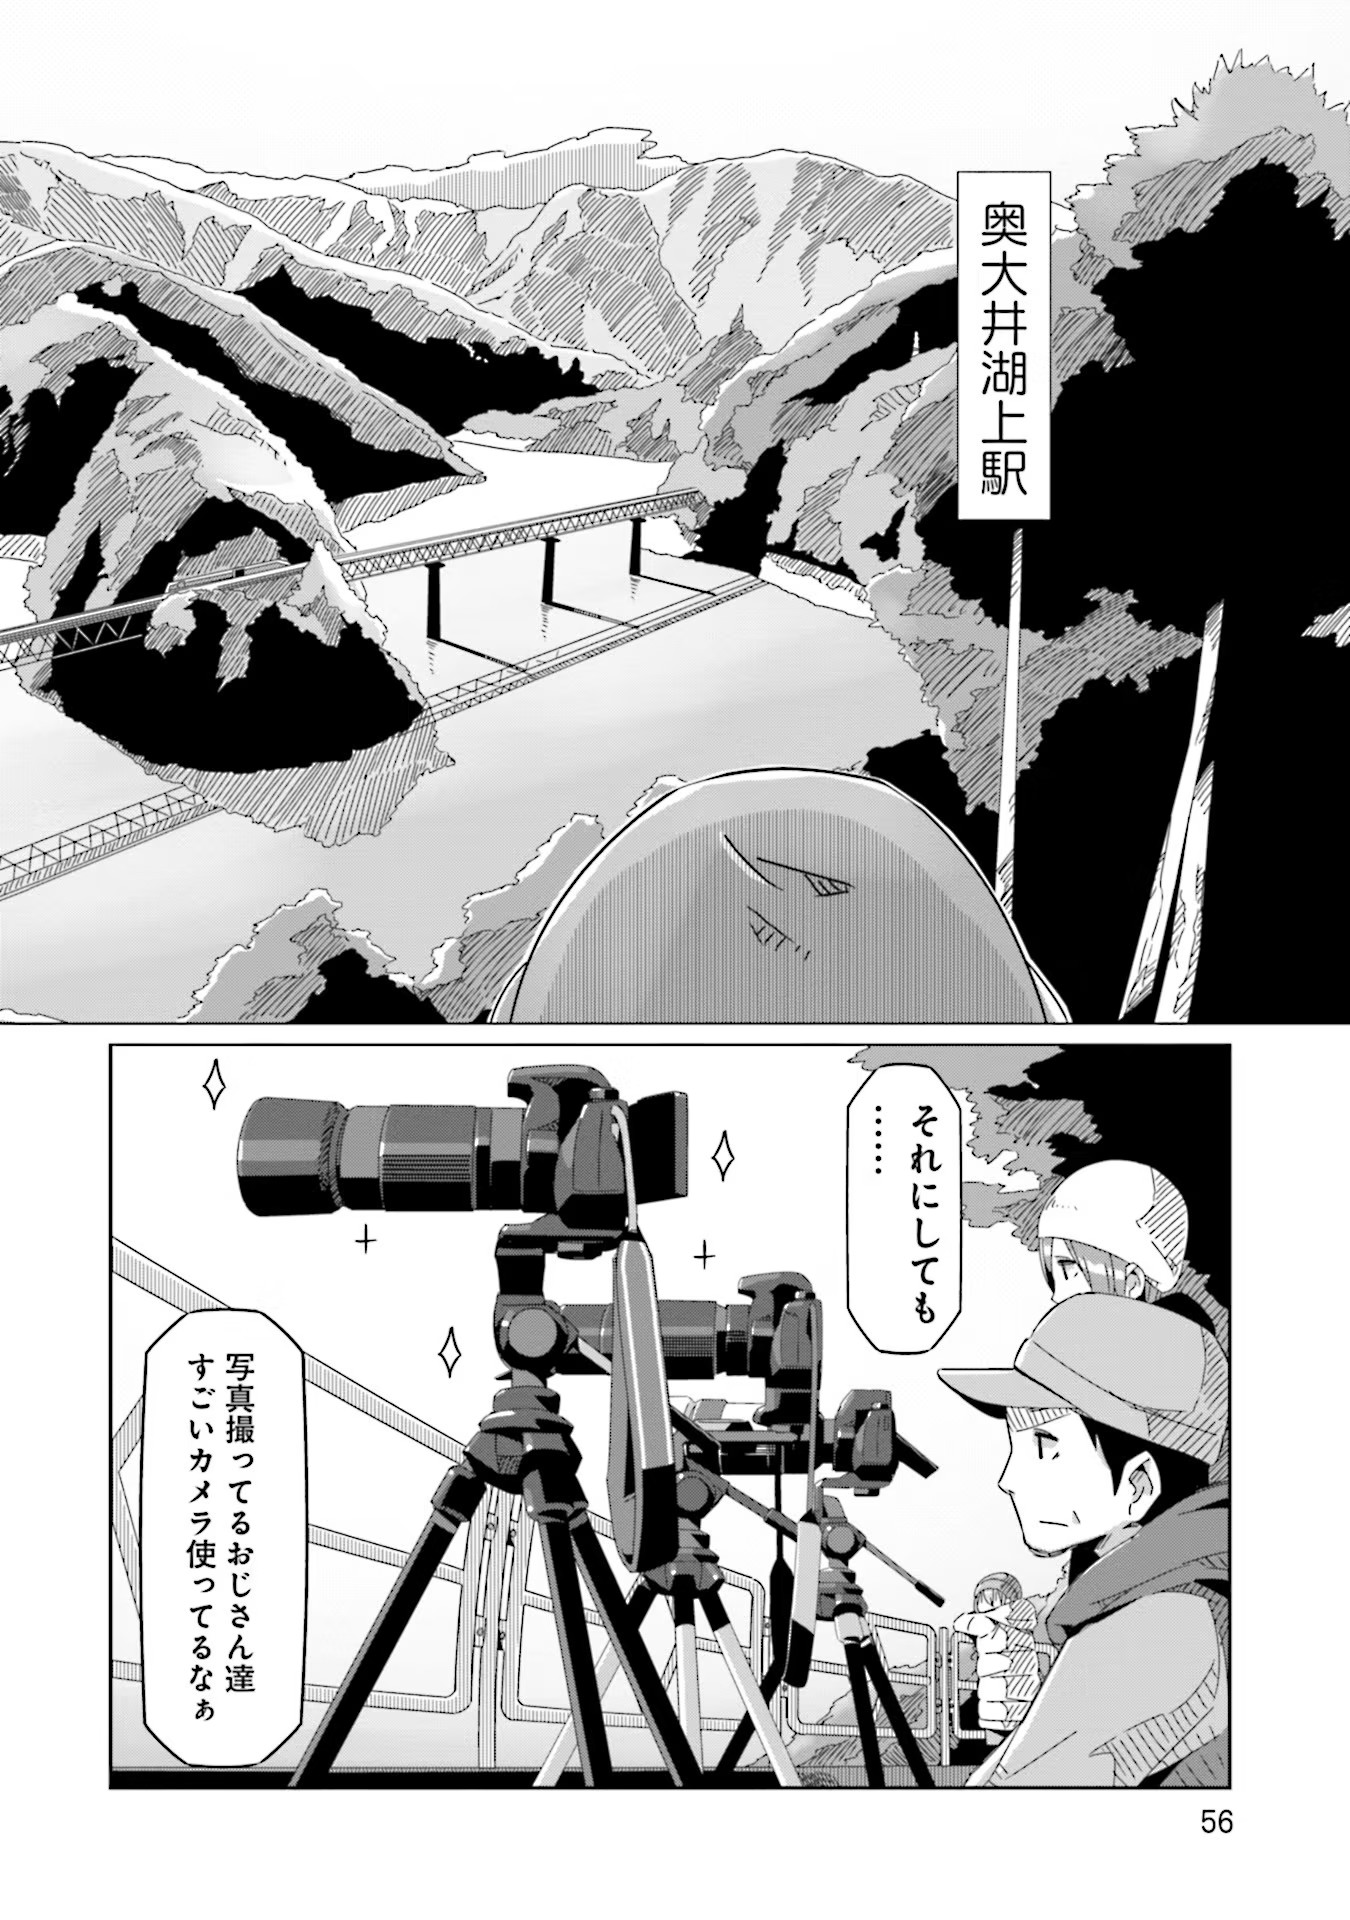 Yuru Camp - Chapter 60 - Page 2